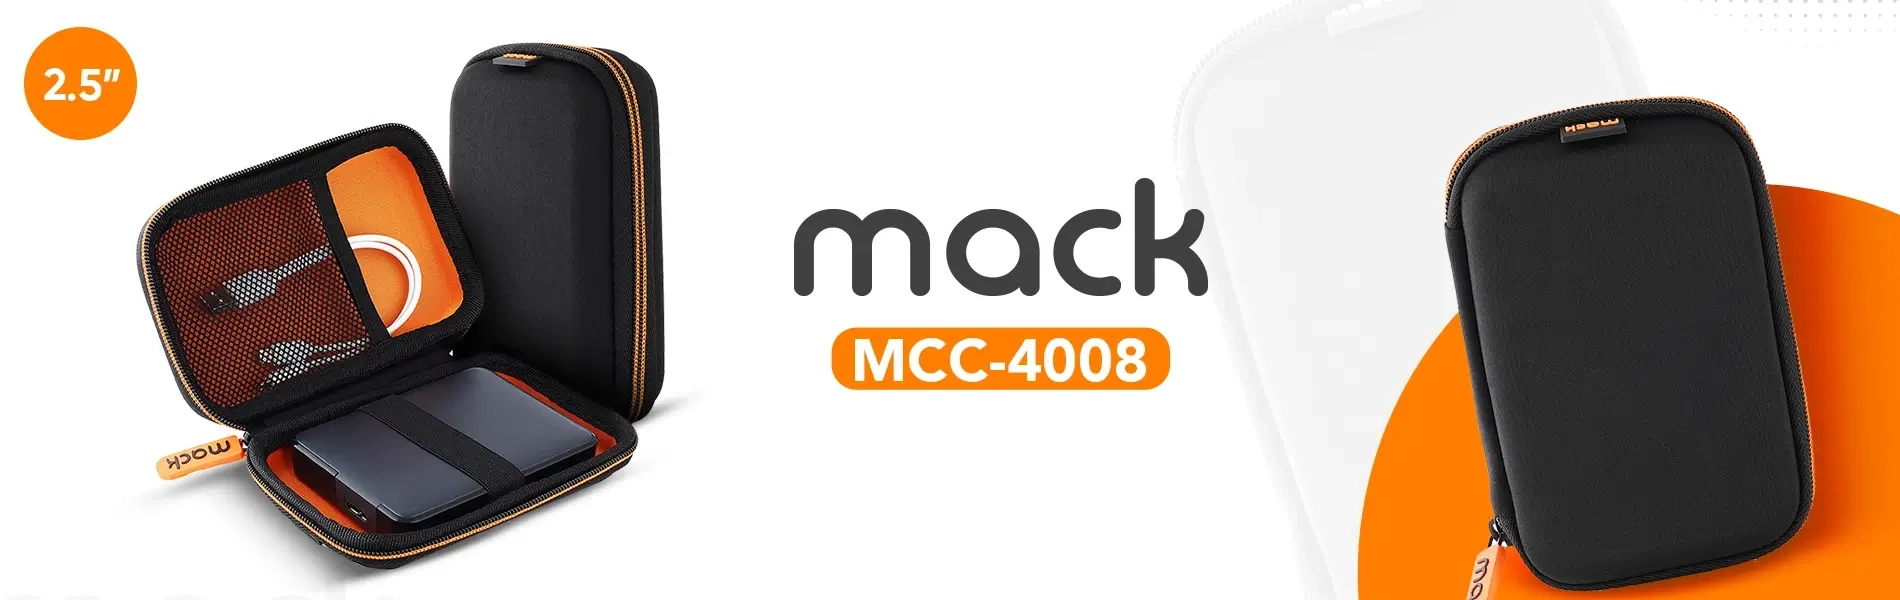 1900x600px Mack hard disk kilifi